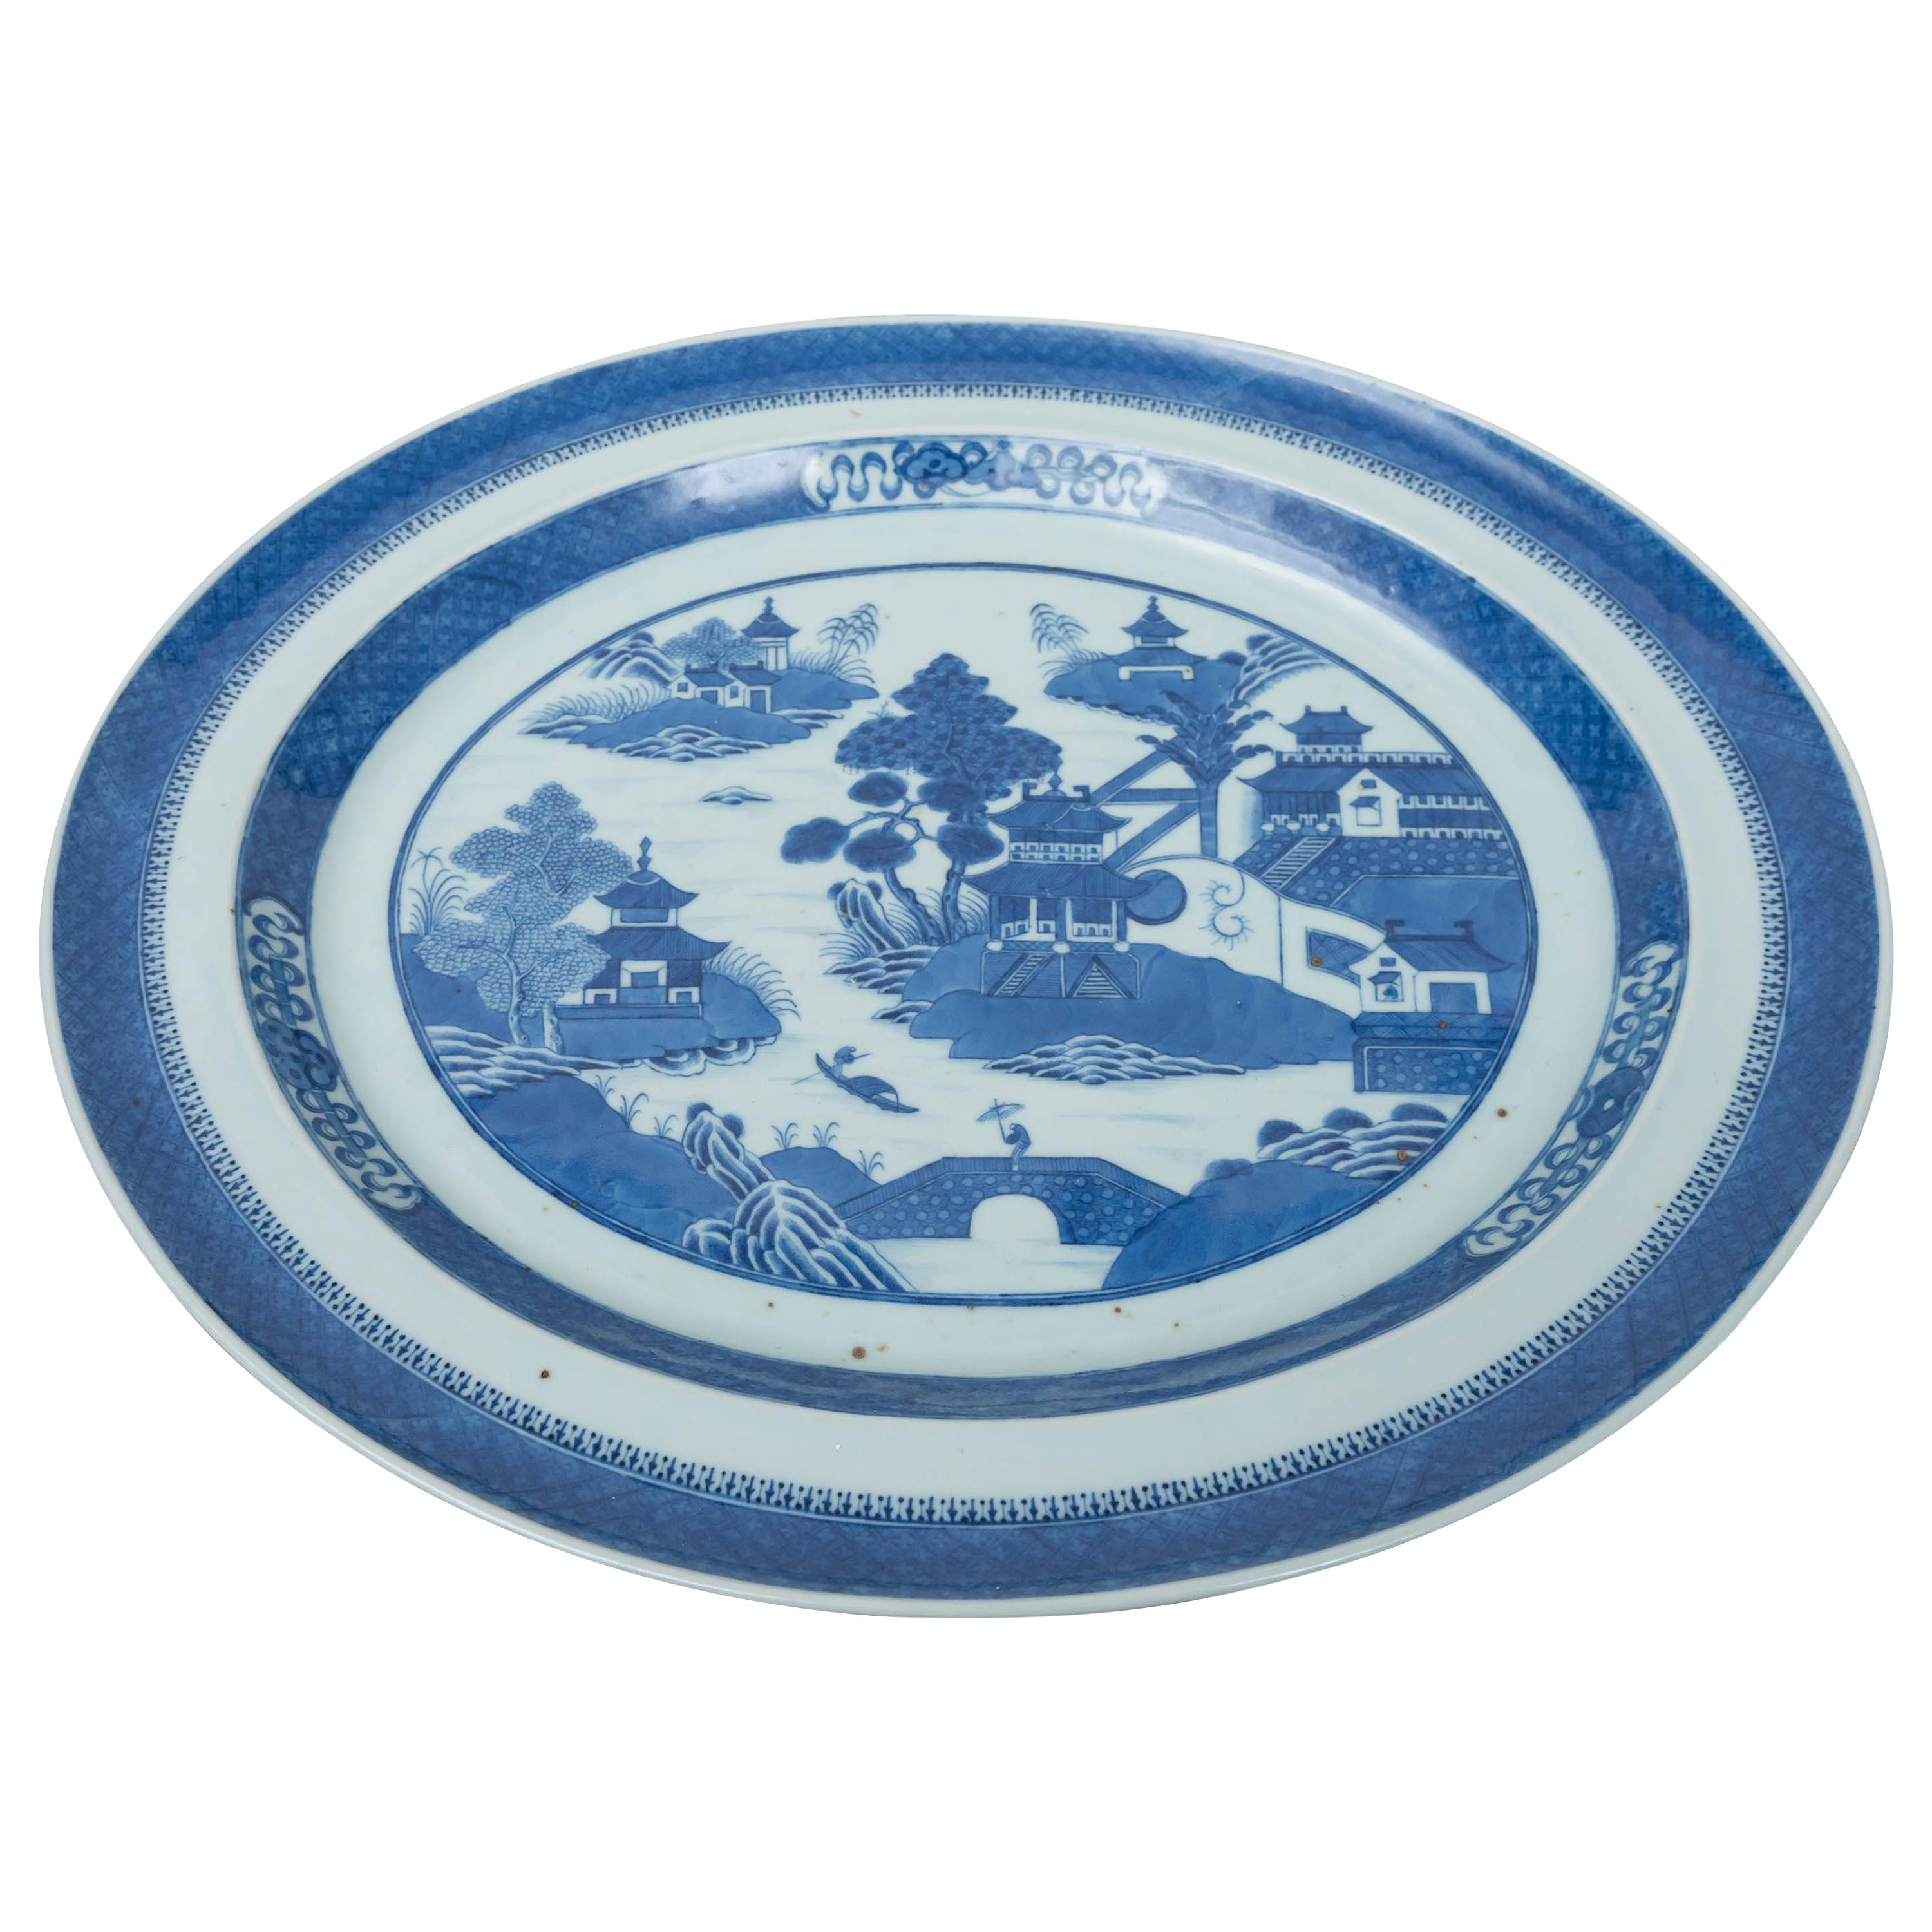 Extra large plat ovale chinois Canton bleu et blanc